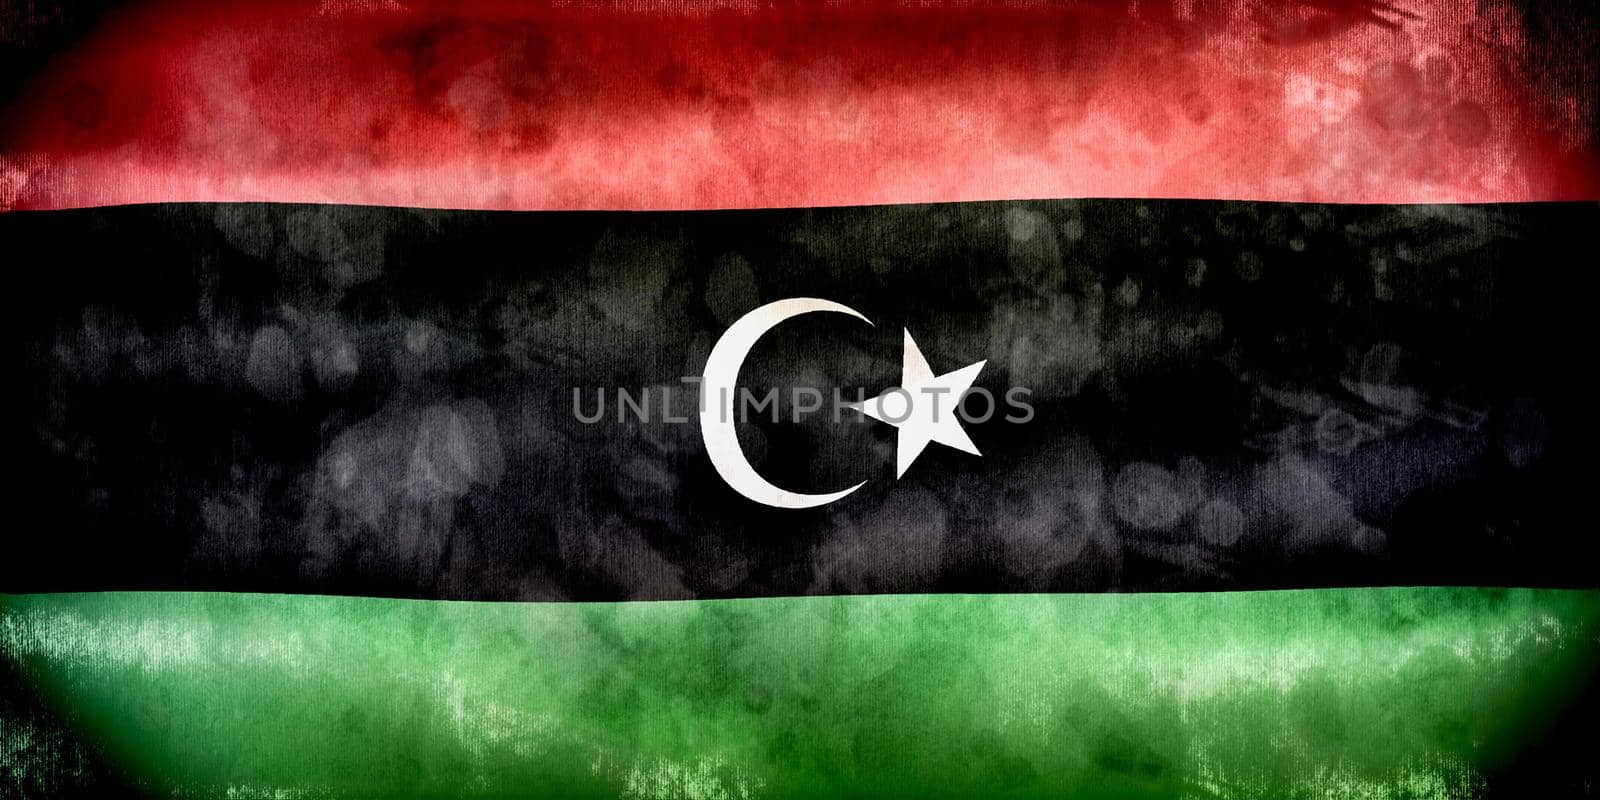 3D-Illustration of a Libya flag - realistic waving fabric flag by MP_foto71